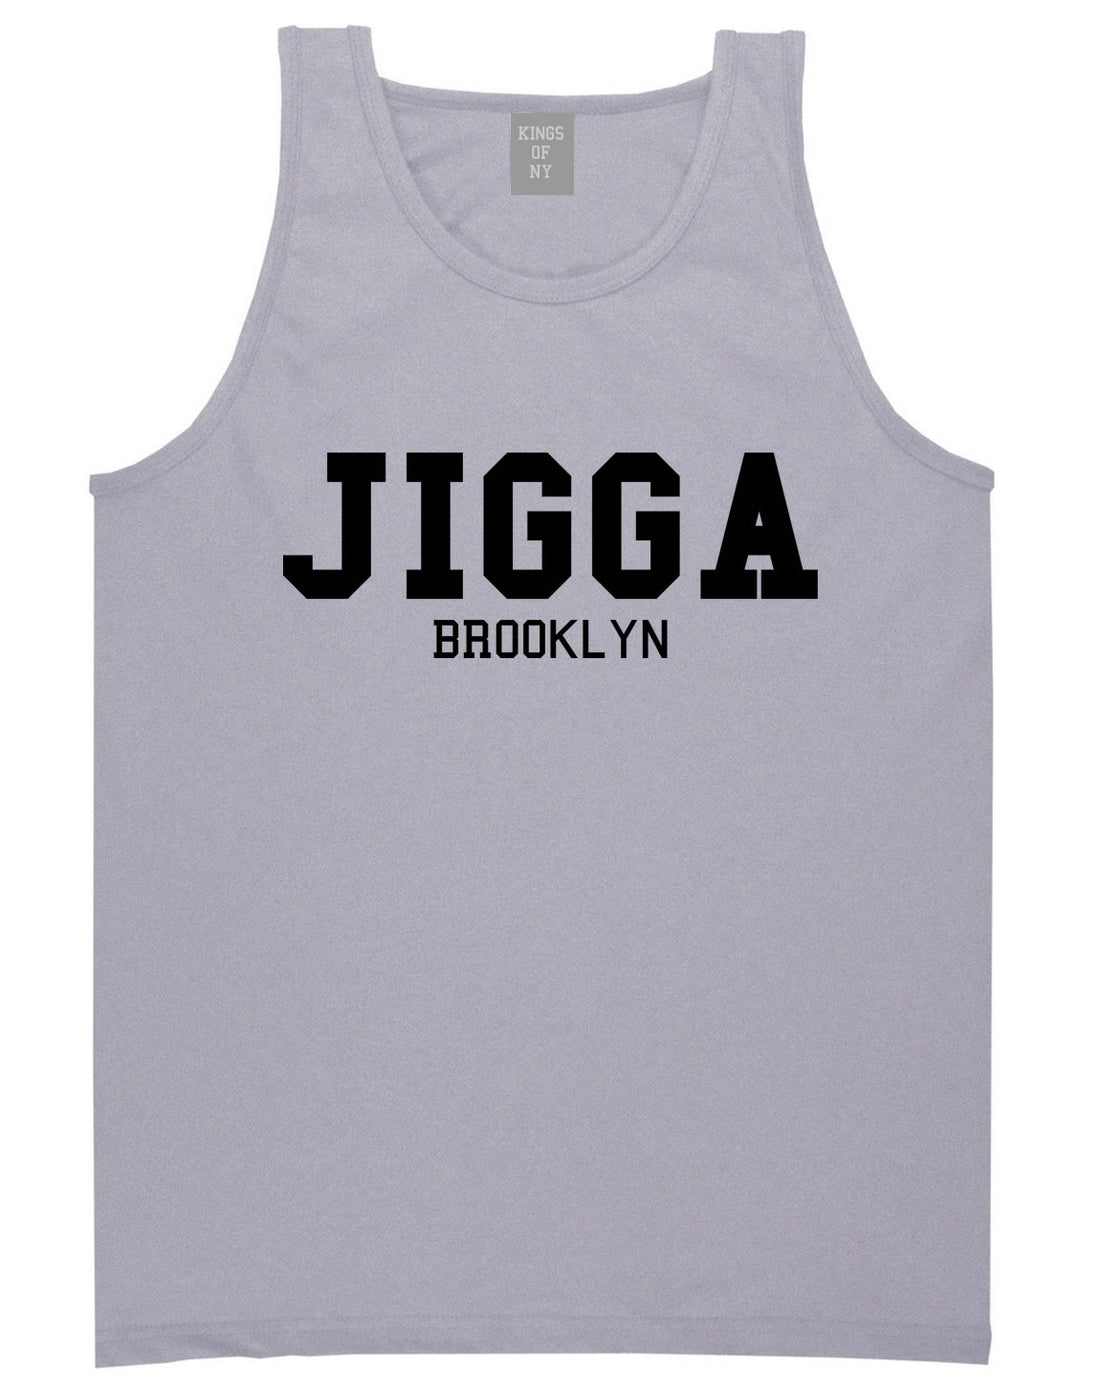 Jigga Brooklyn Tank Top in Grey by Kings Of NY